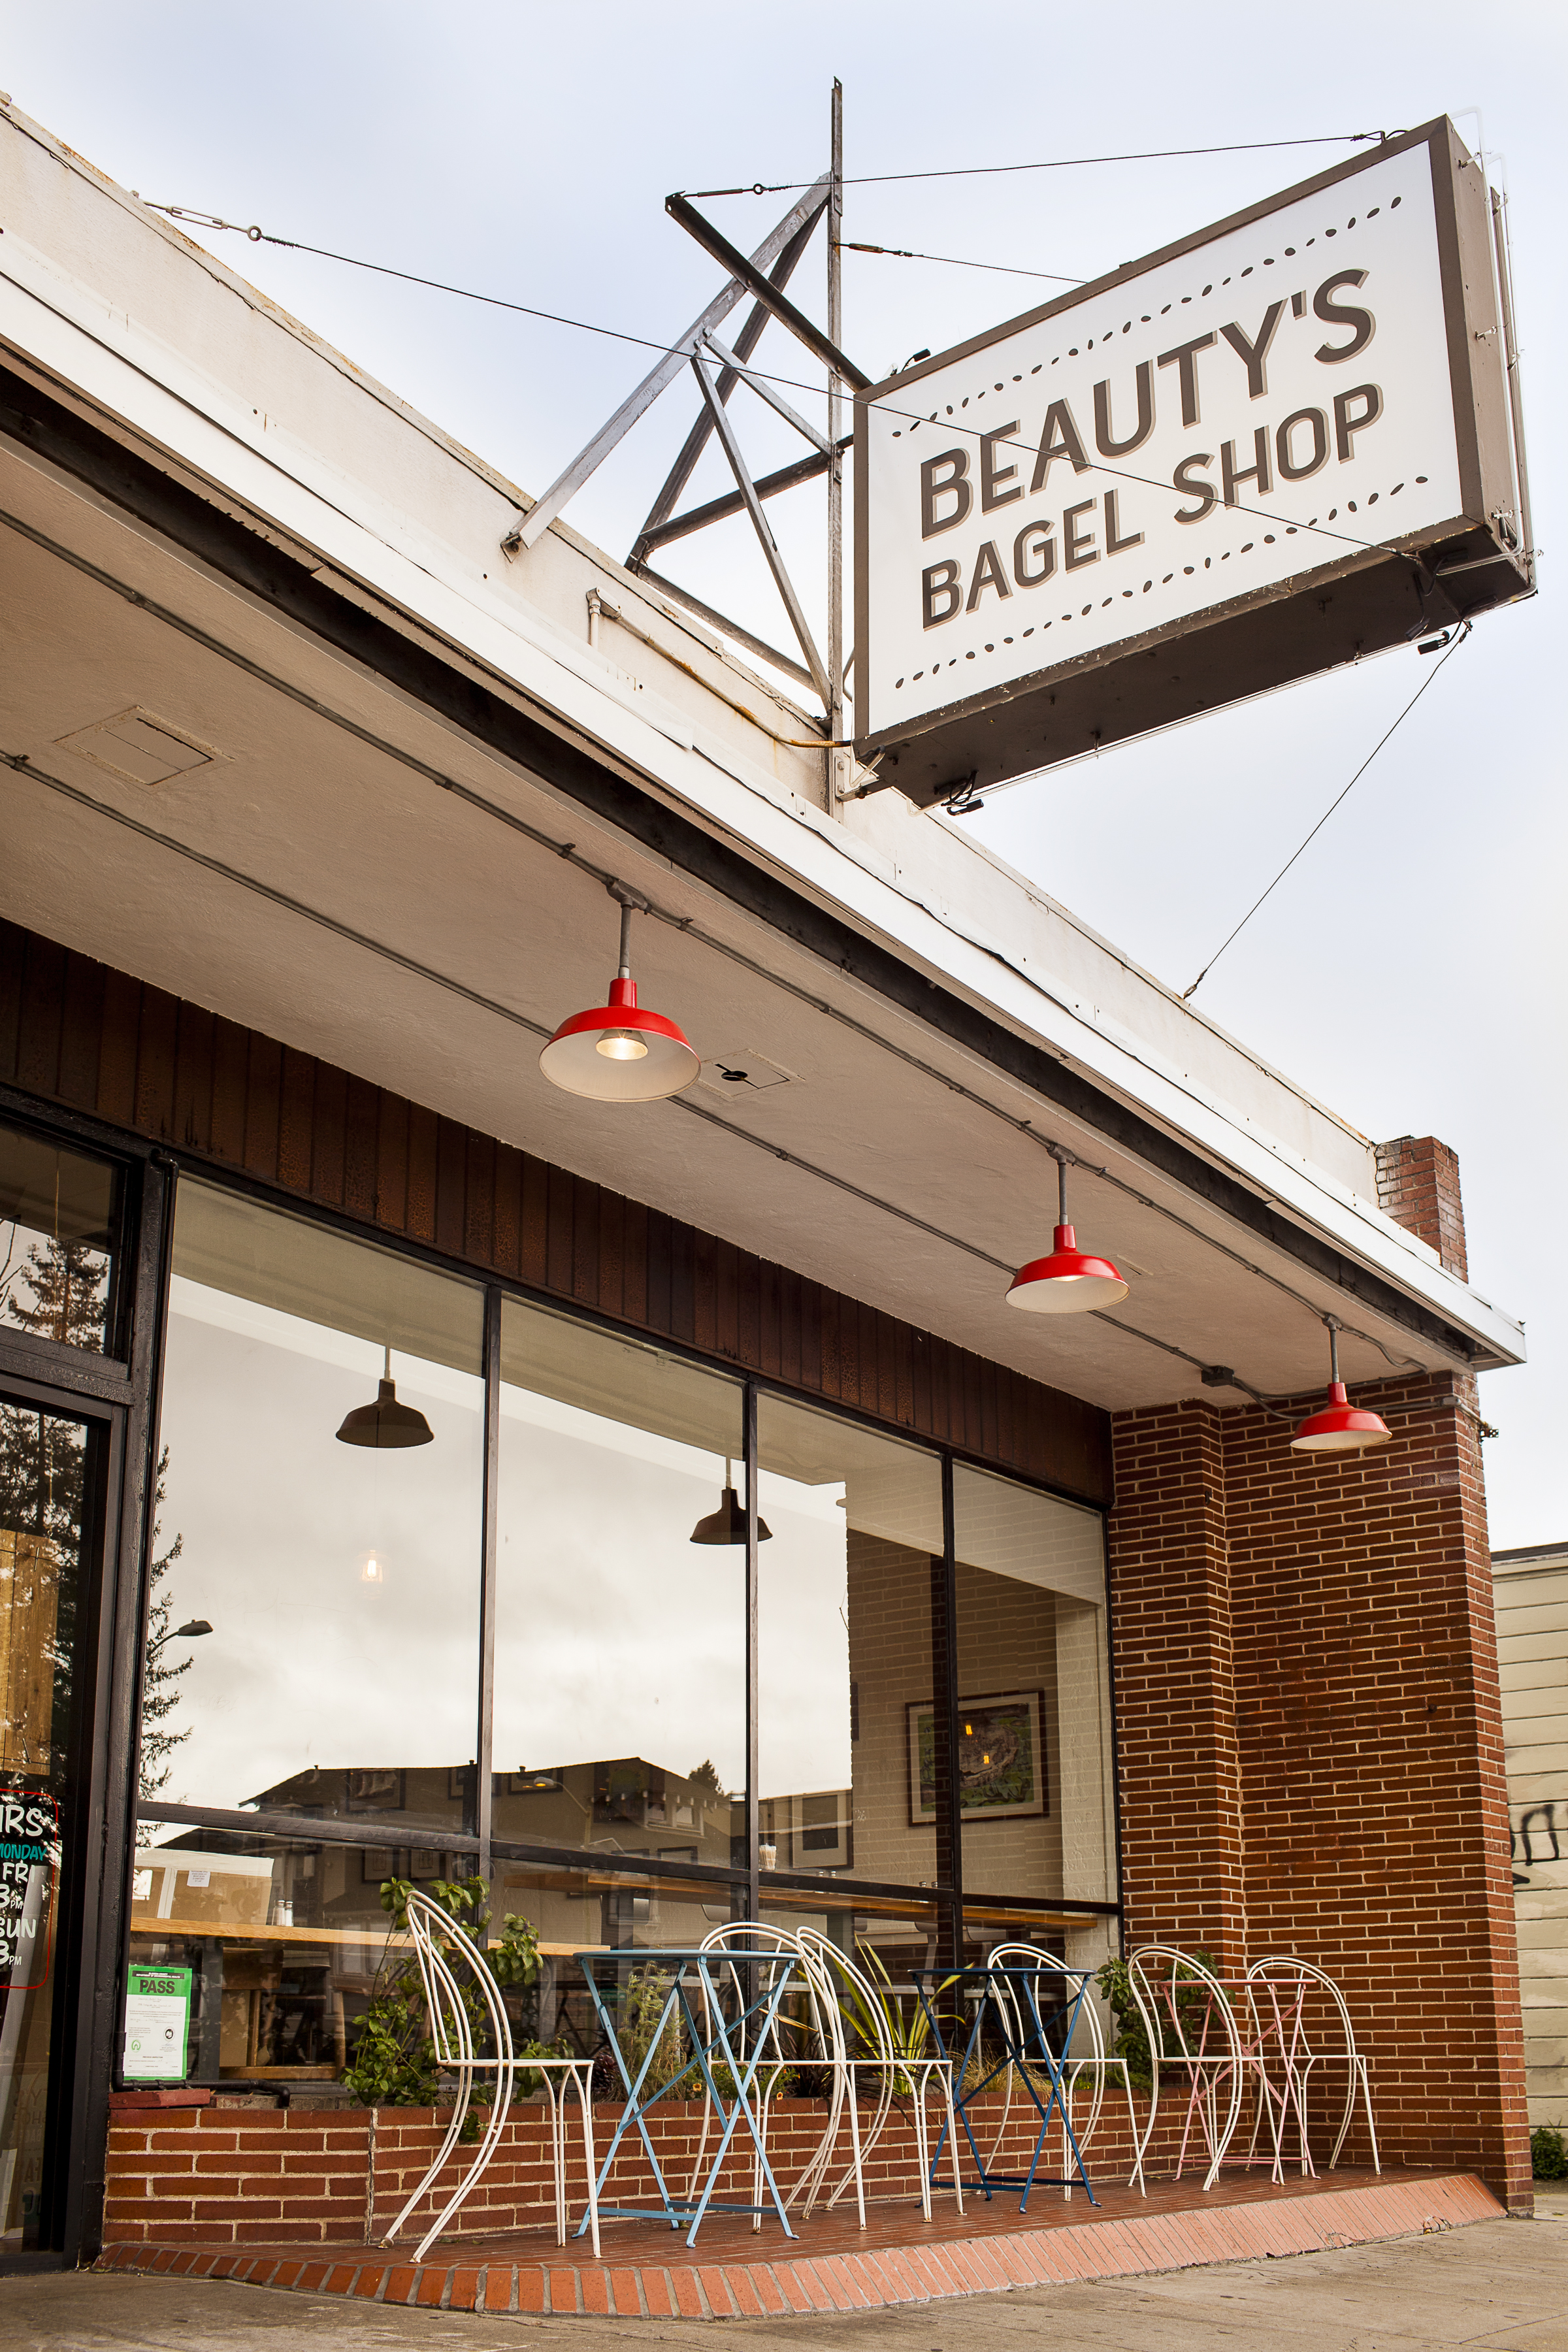 Exterior of Beauty’s Bagel Shop